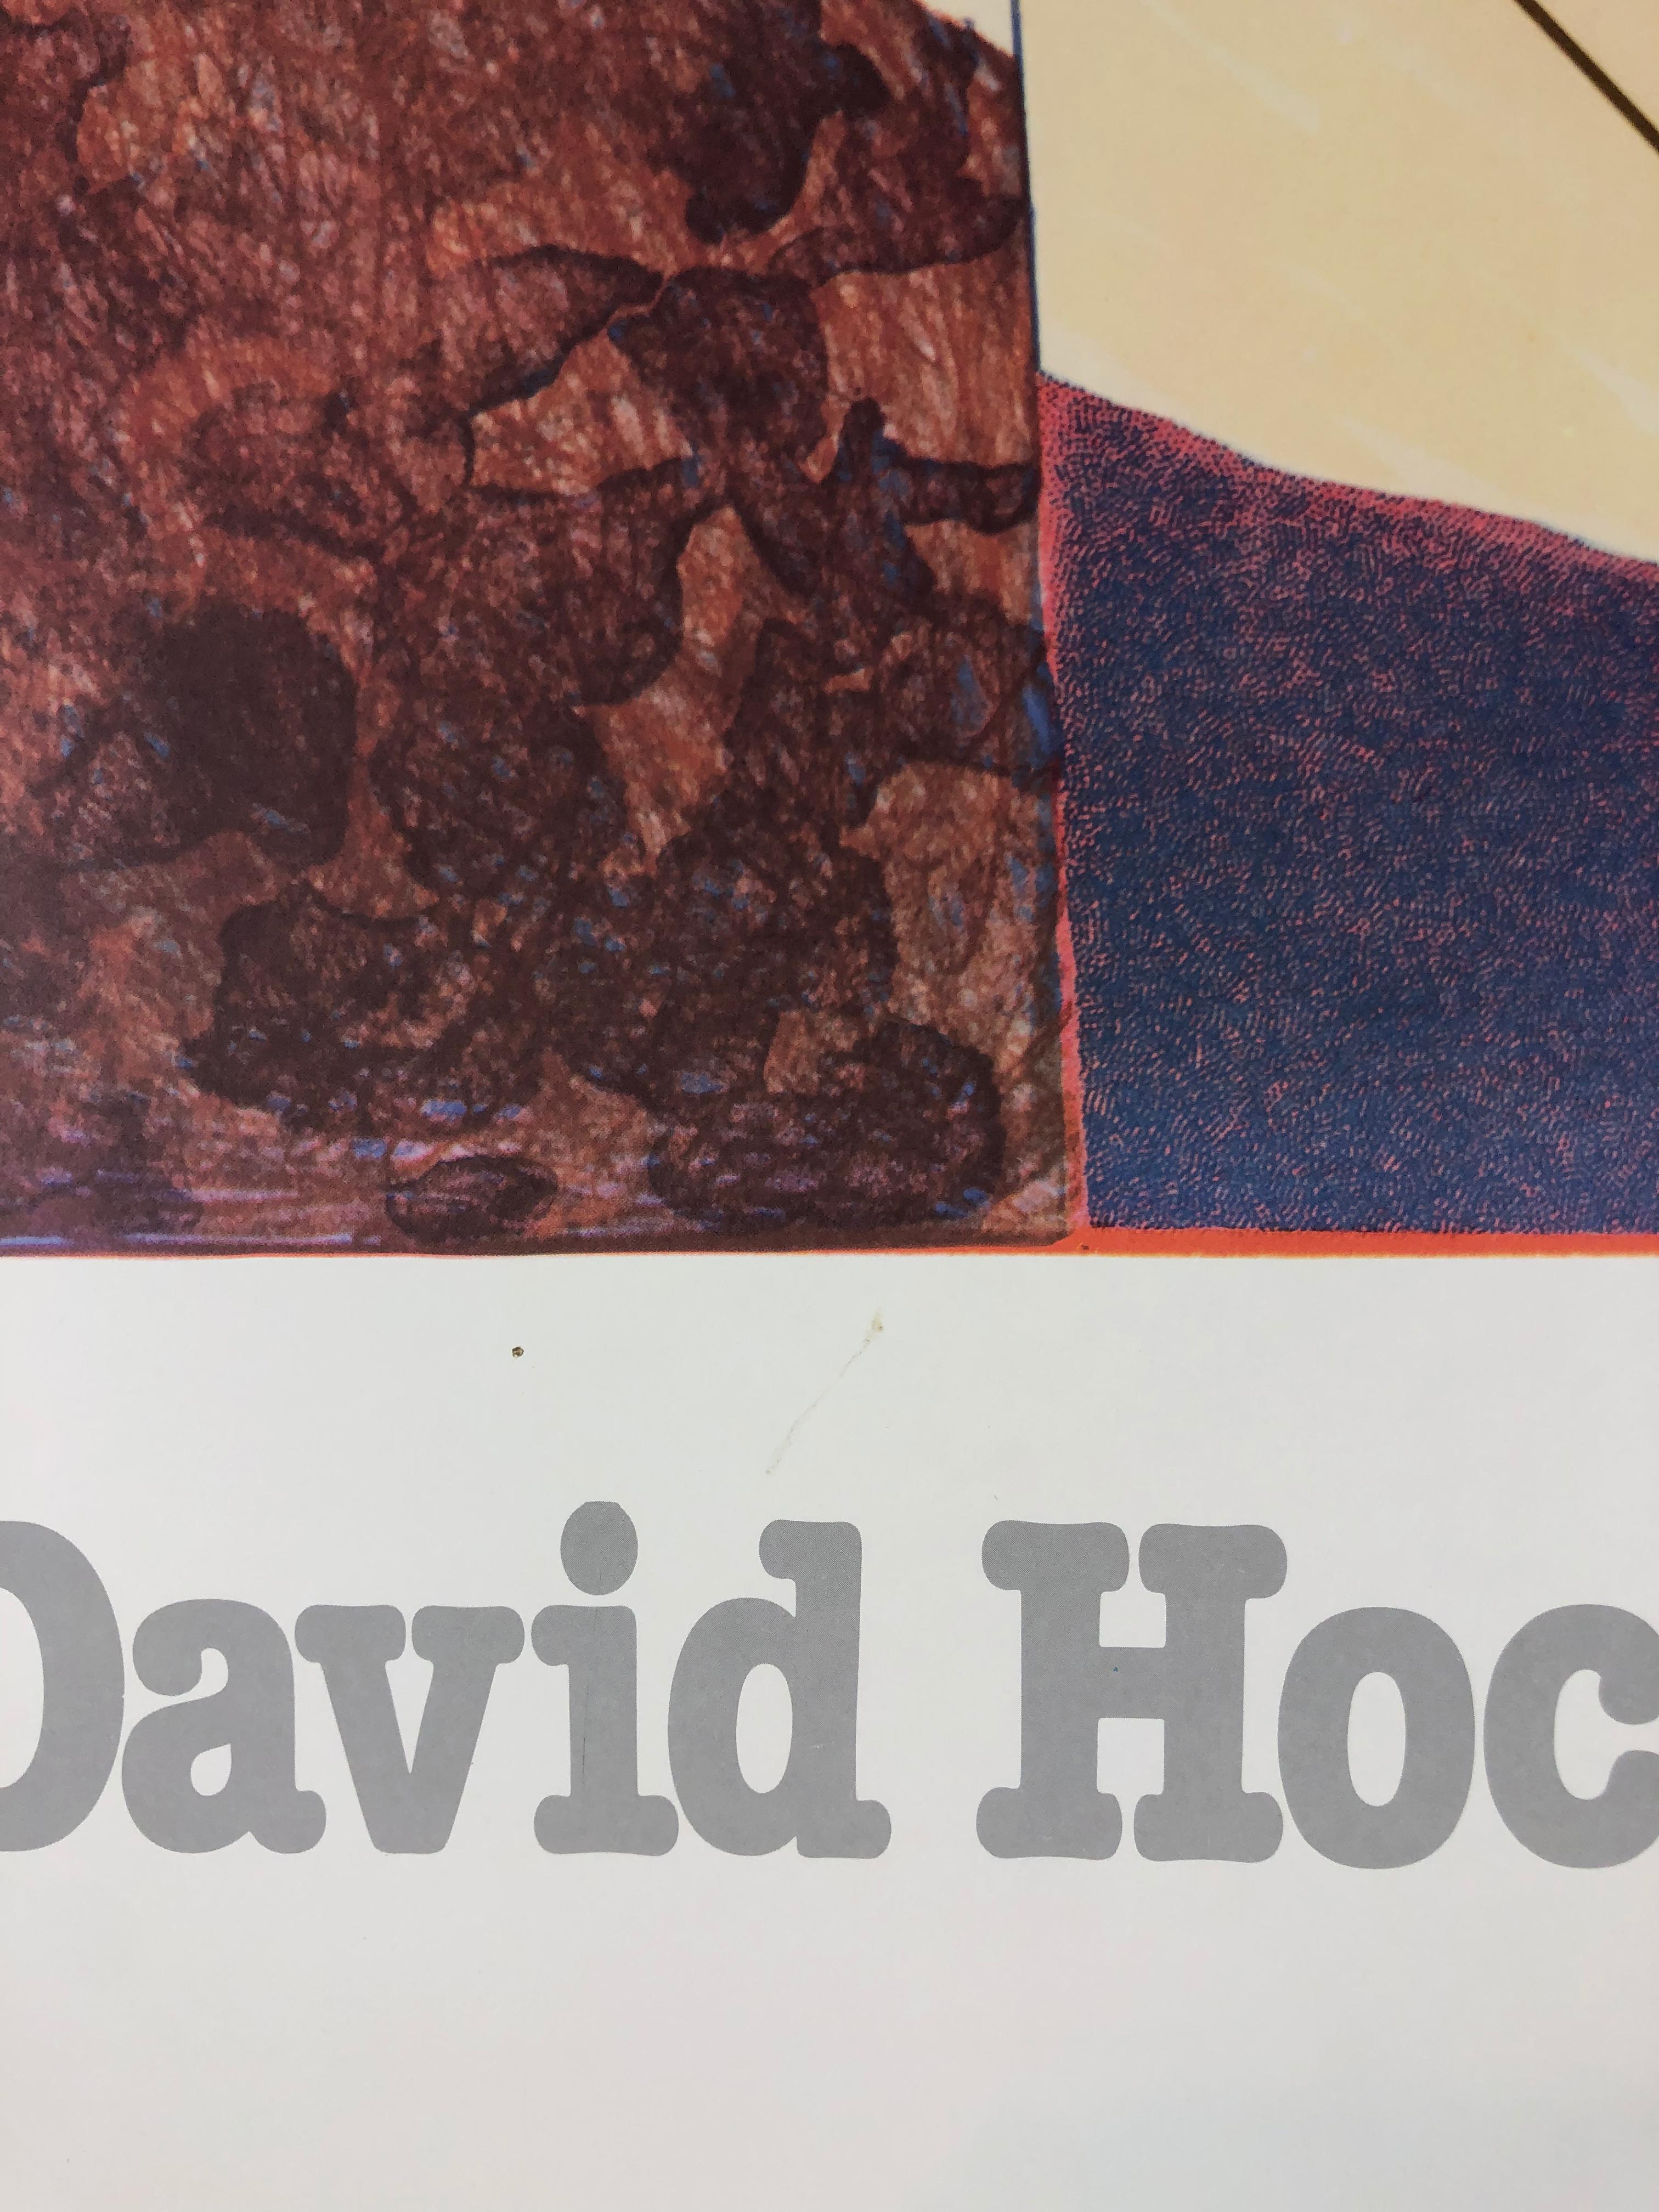 david hockney vintage poster